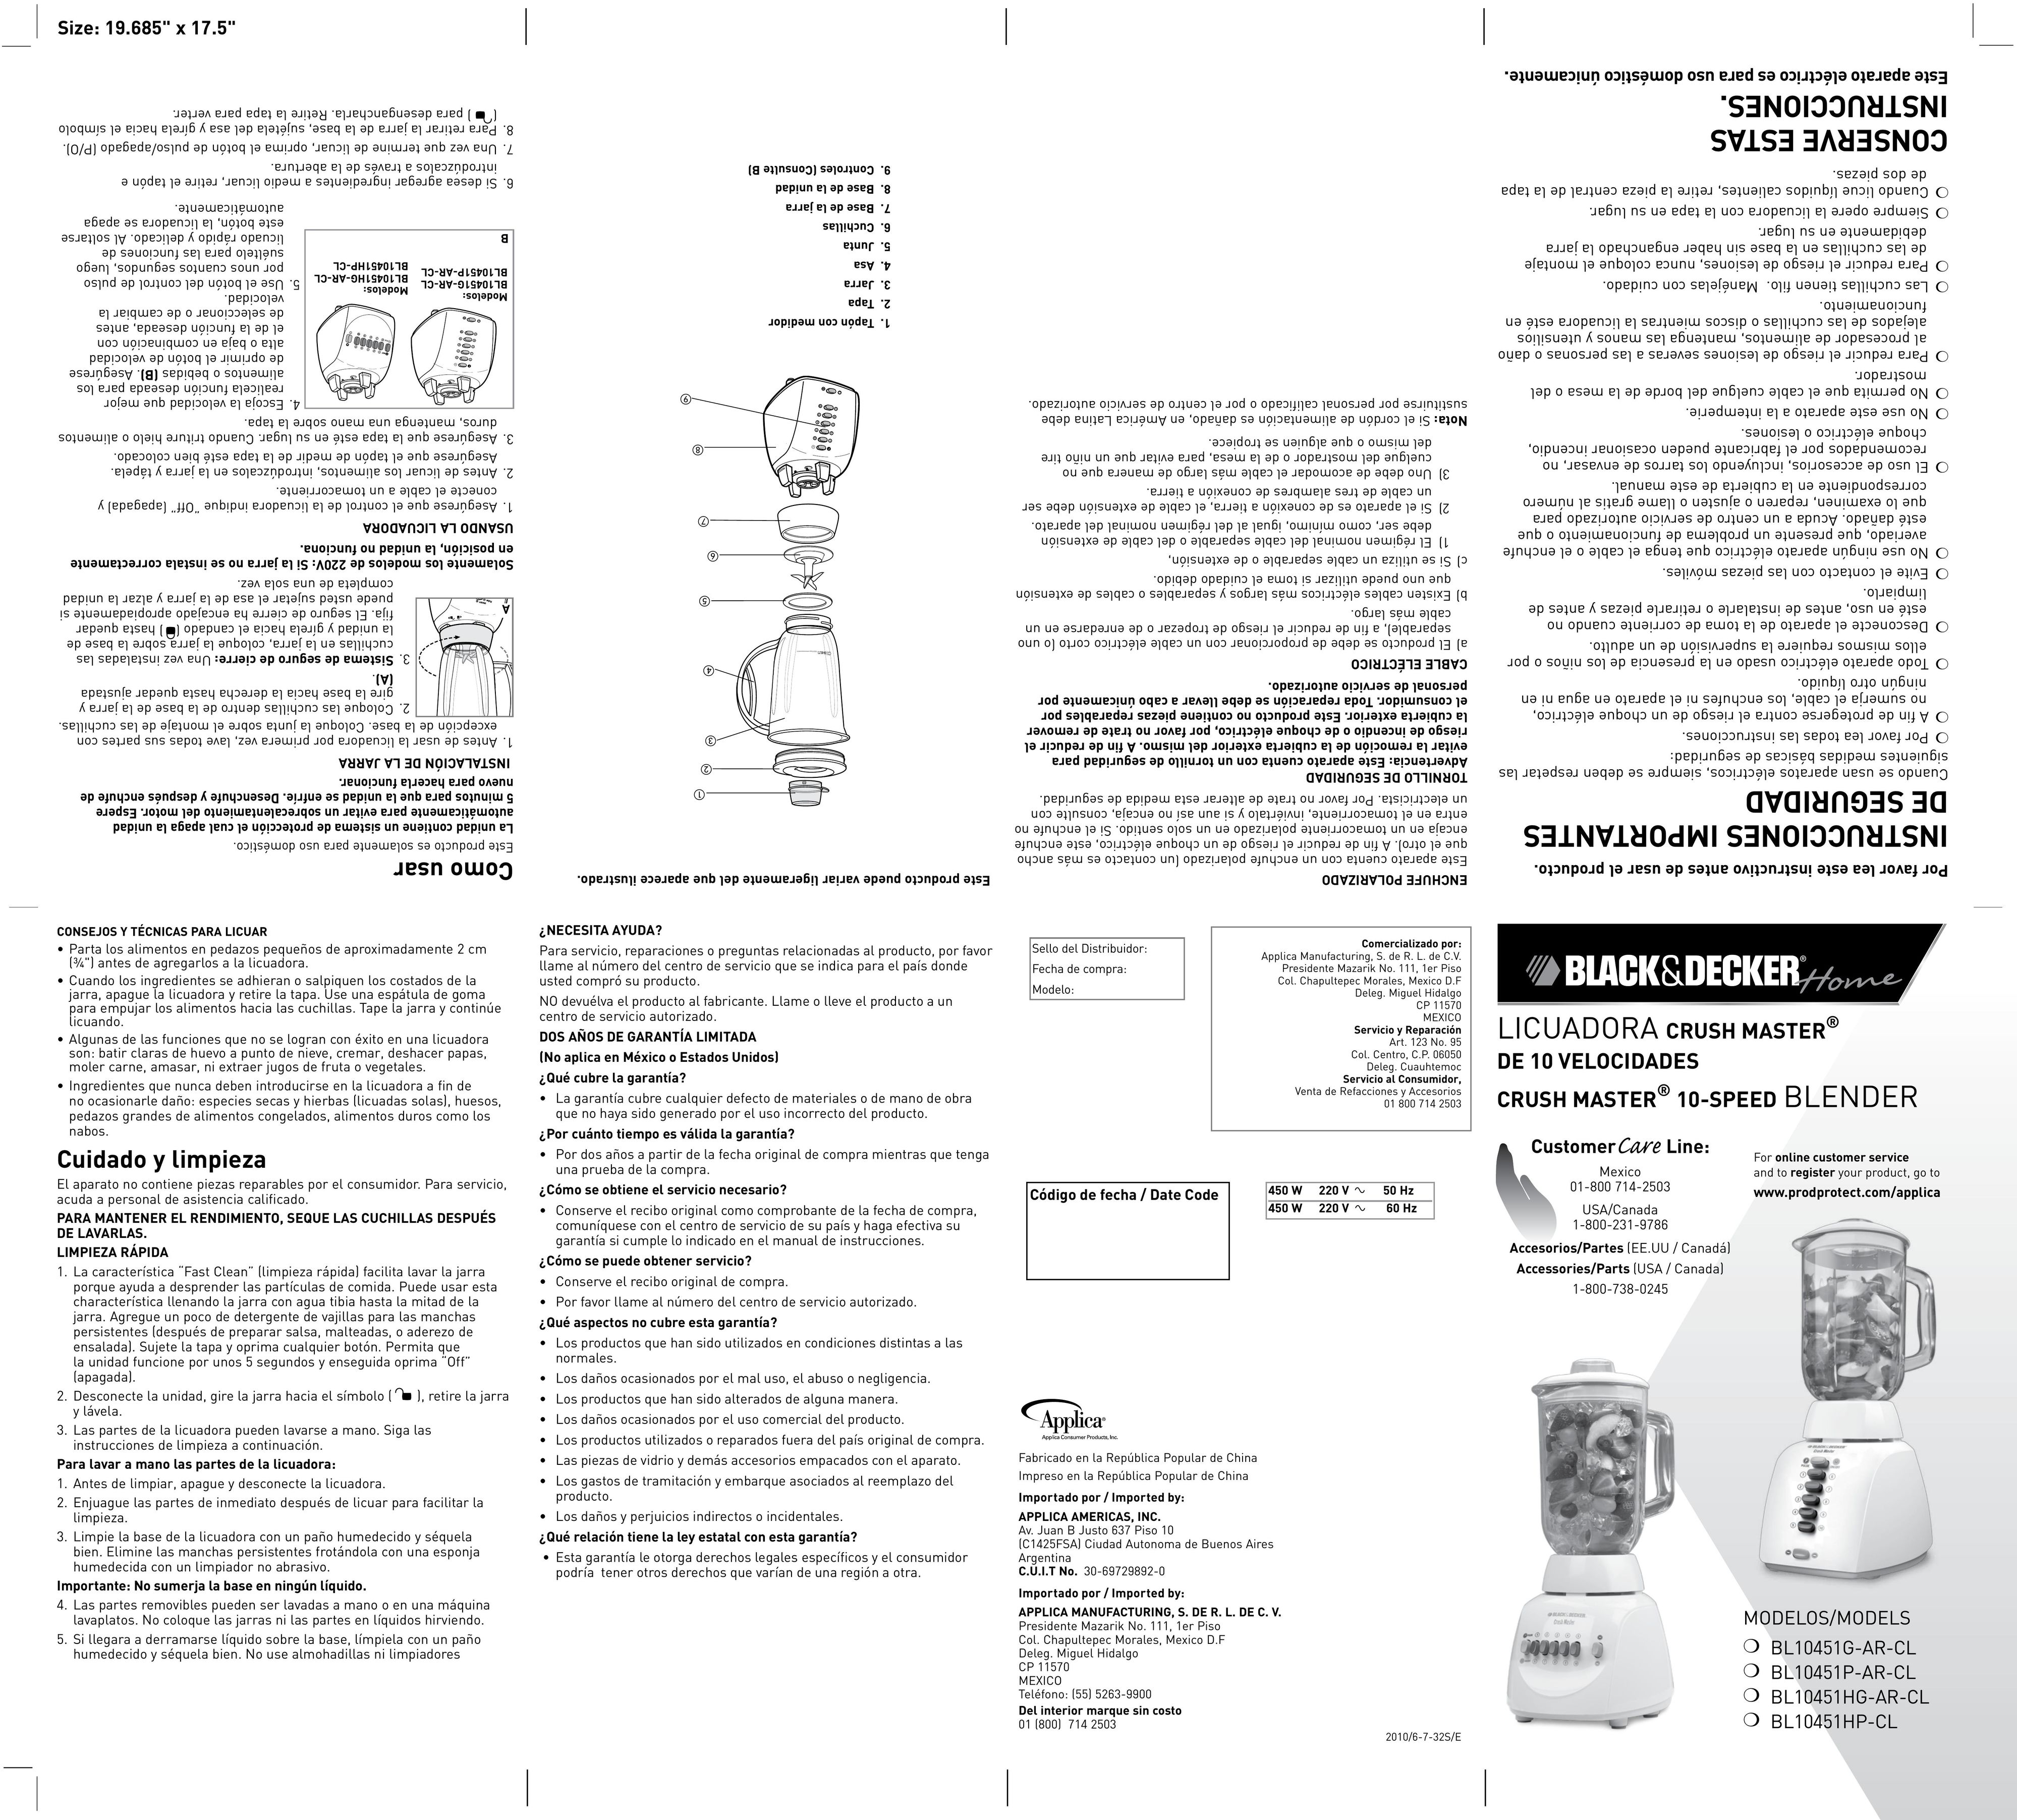 Black & Decker BL10451HG-AR-CL Blender User Manual